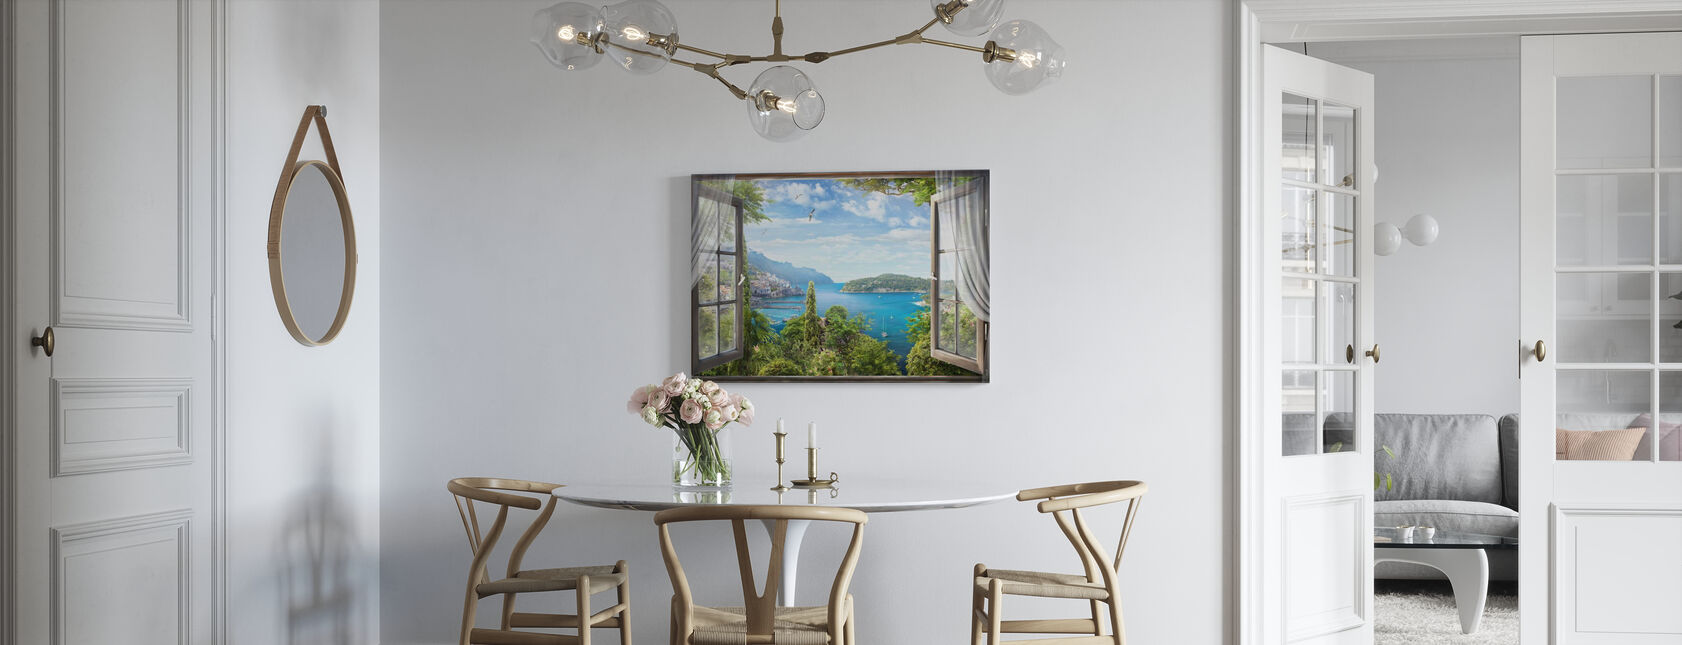 Window Bay View - Canvas print - Kitchen